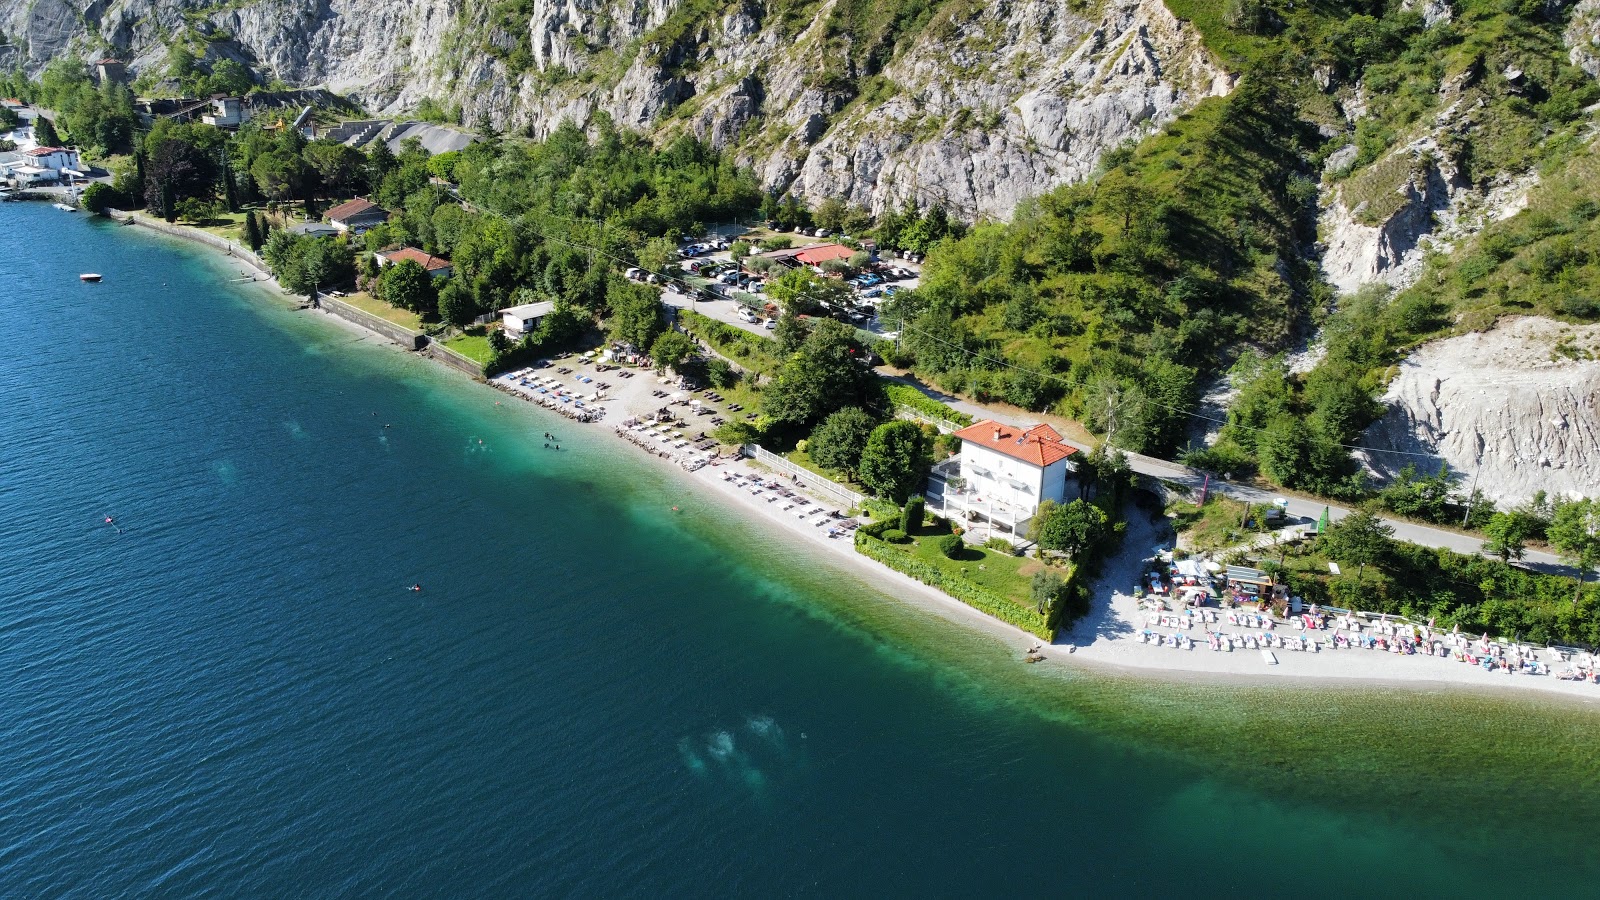 Photo of Spiaggia bar rapa nui with spacious shore